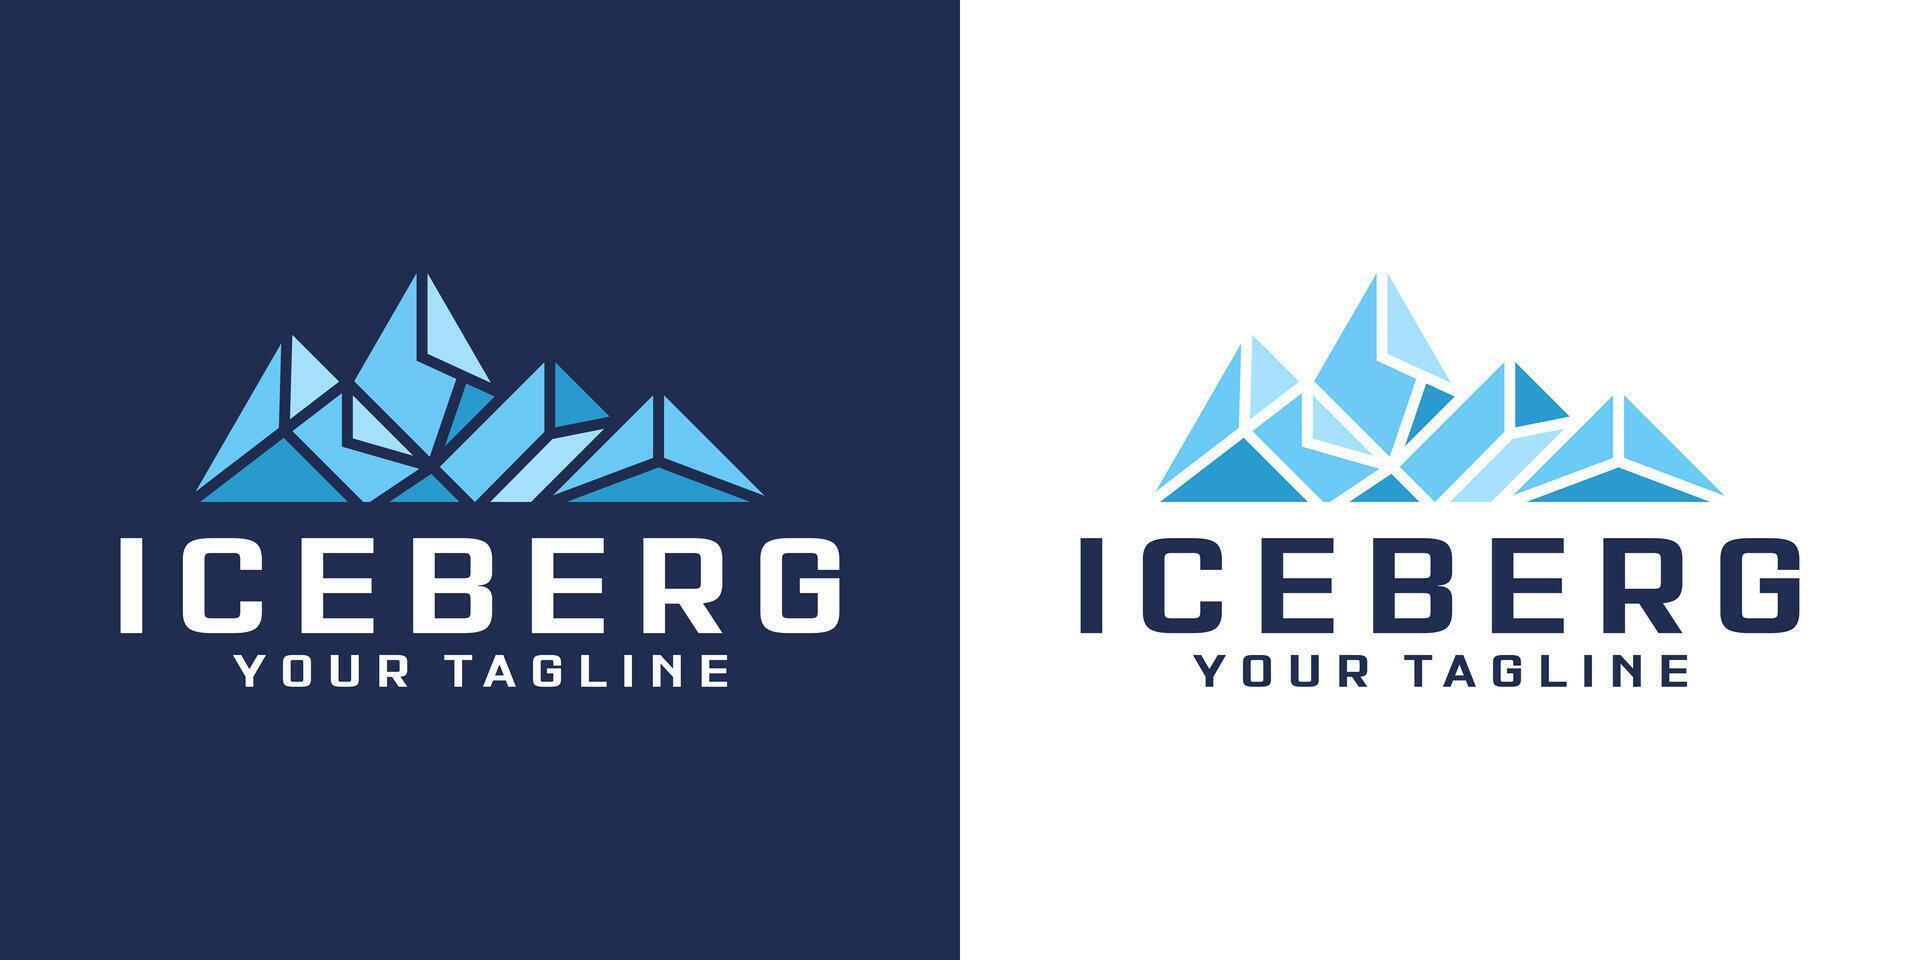 geometrico montagna o iceberg logo design vettore